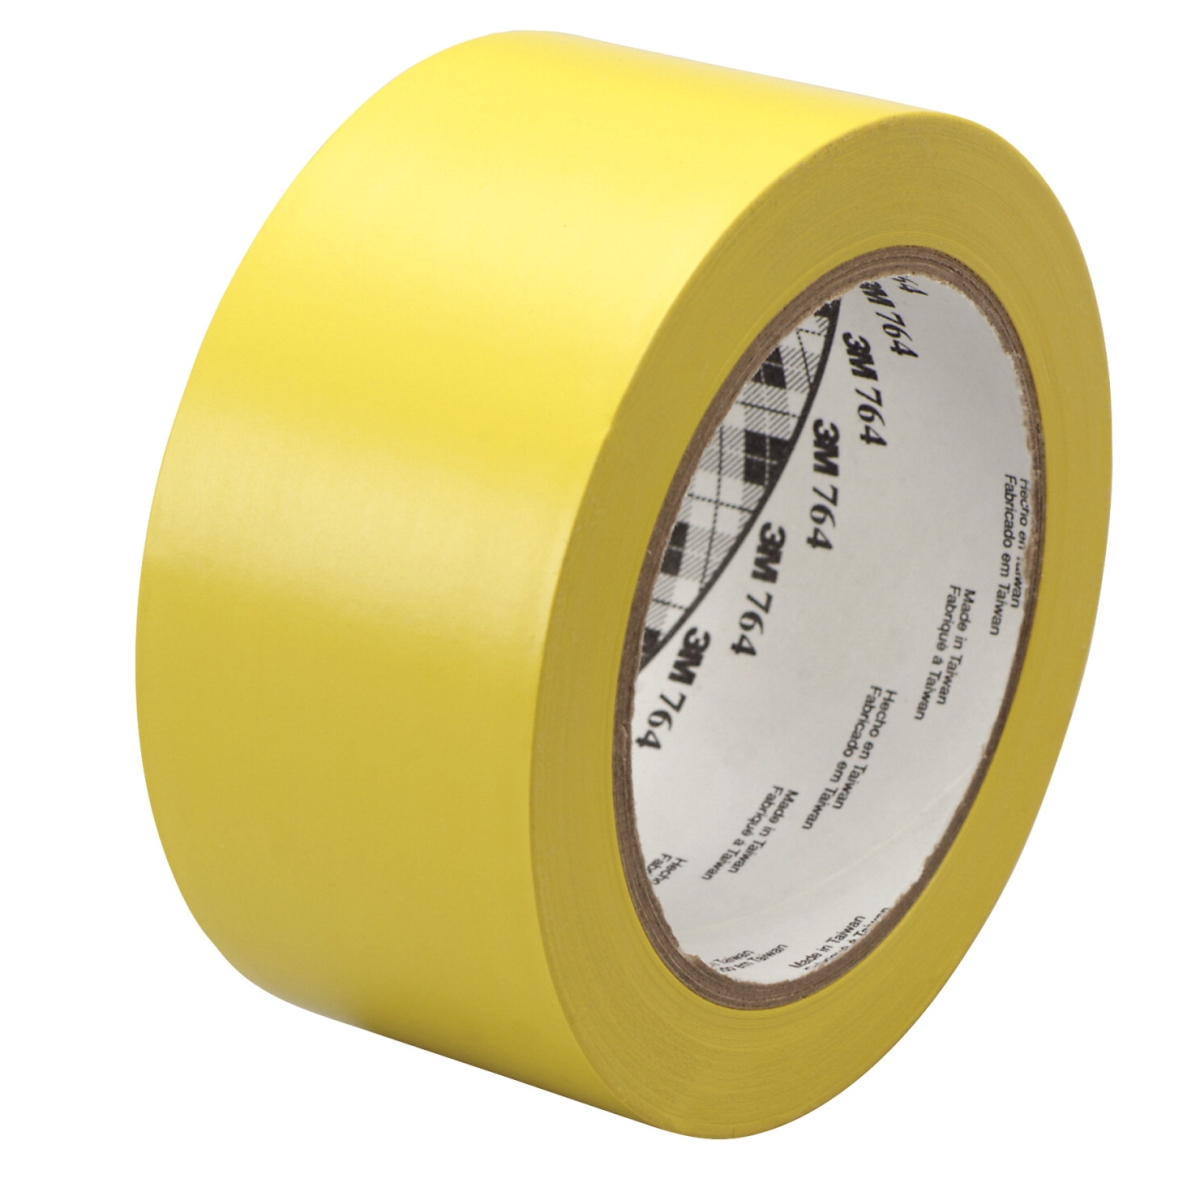 General Purpose Wear Resistant Floor Marking Tape Roll, 1 In. X 36 Yard, Vinyl - Yellow